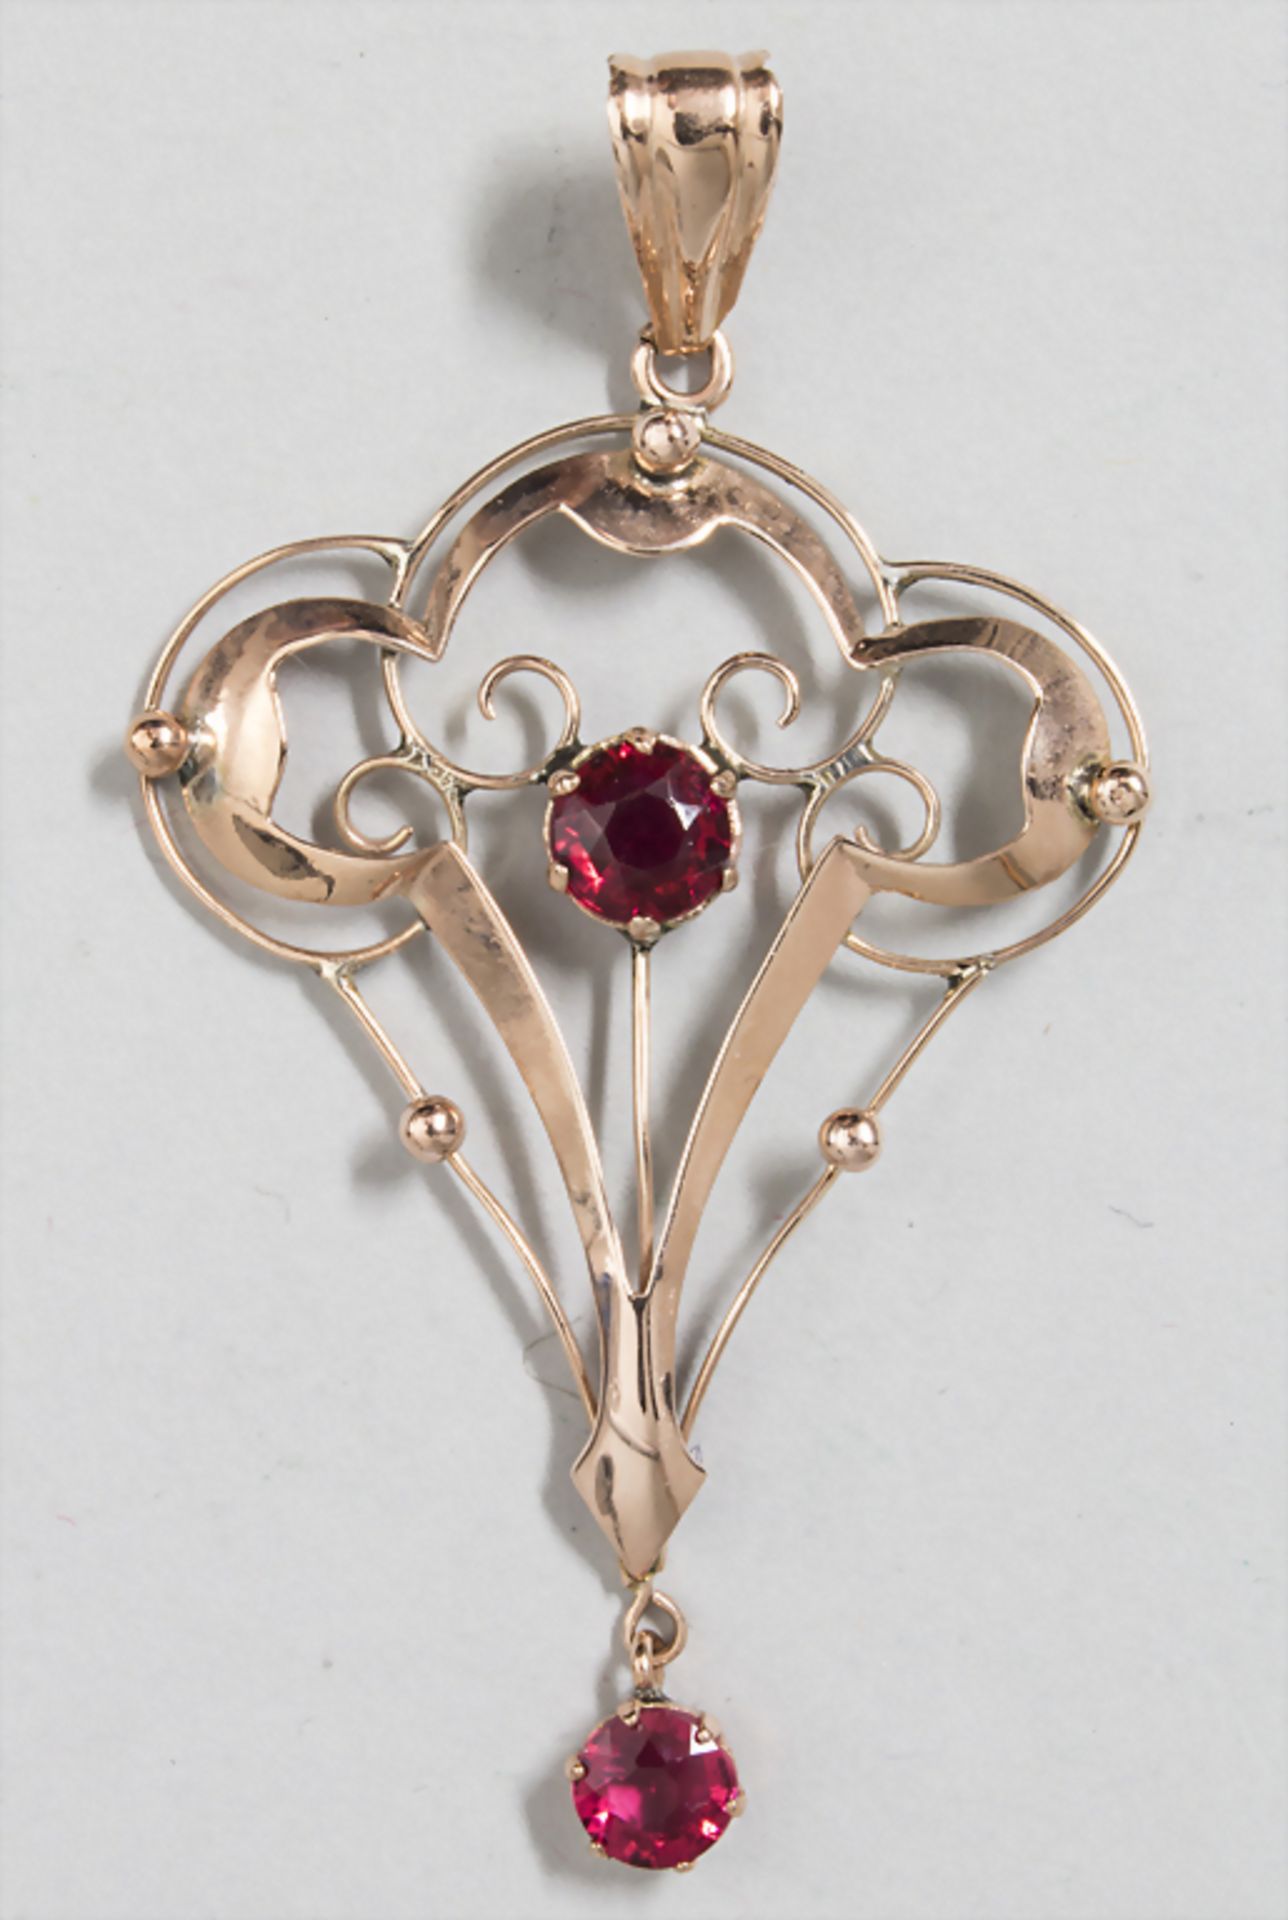 Jugendstil Anhänger / An Art Nouveau pendant, England, um 1900Material: Roségold, ro